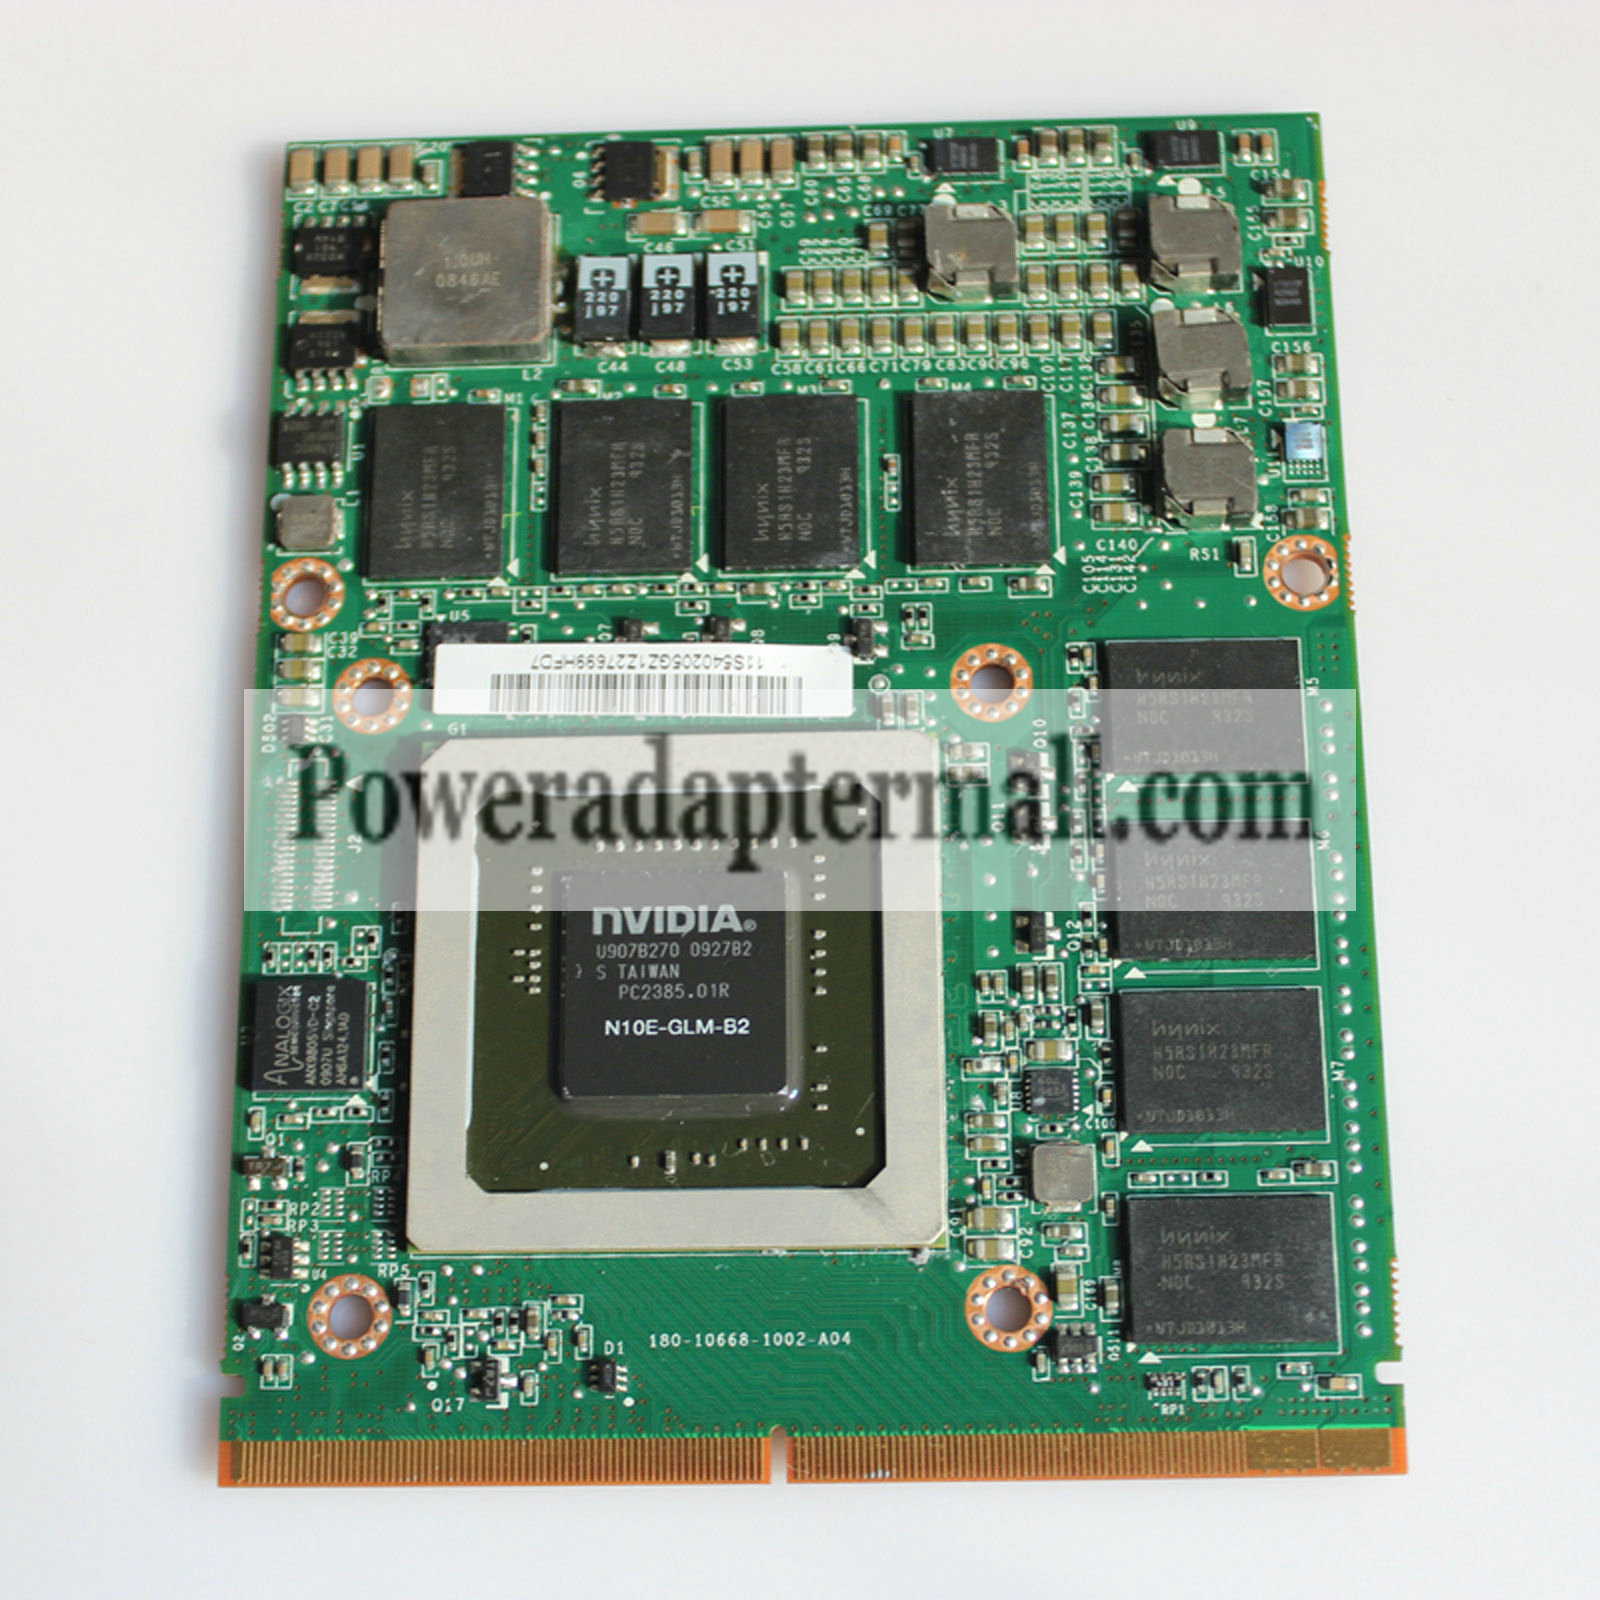 HP nVidia Quadro FX2800M N10E-GLM-B2 DDR3 1GB Video Card